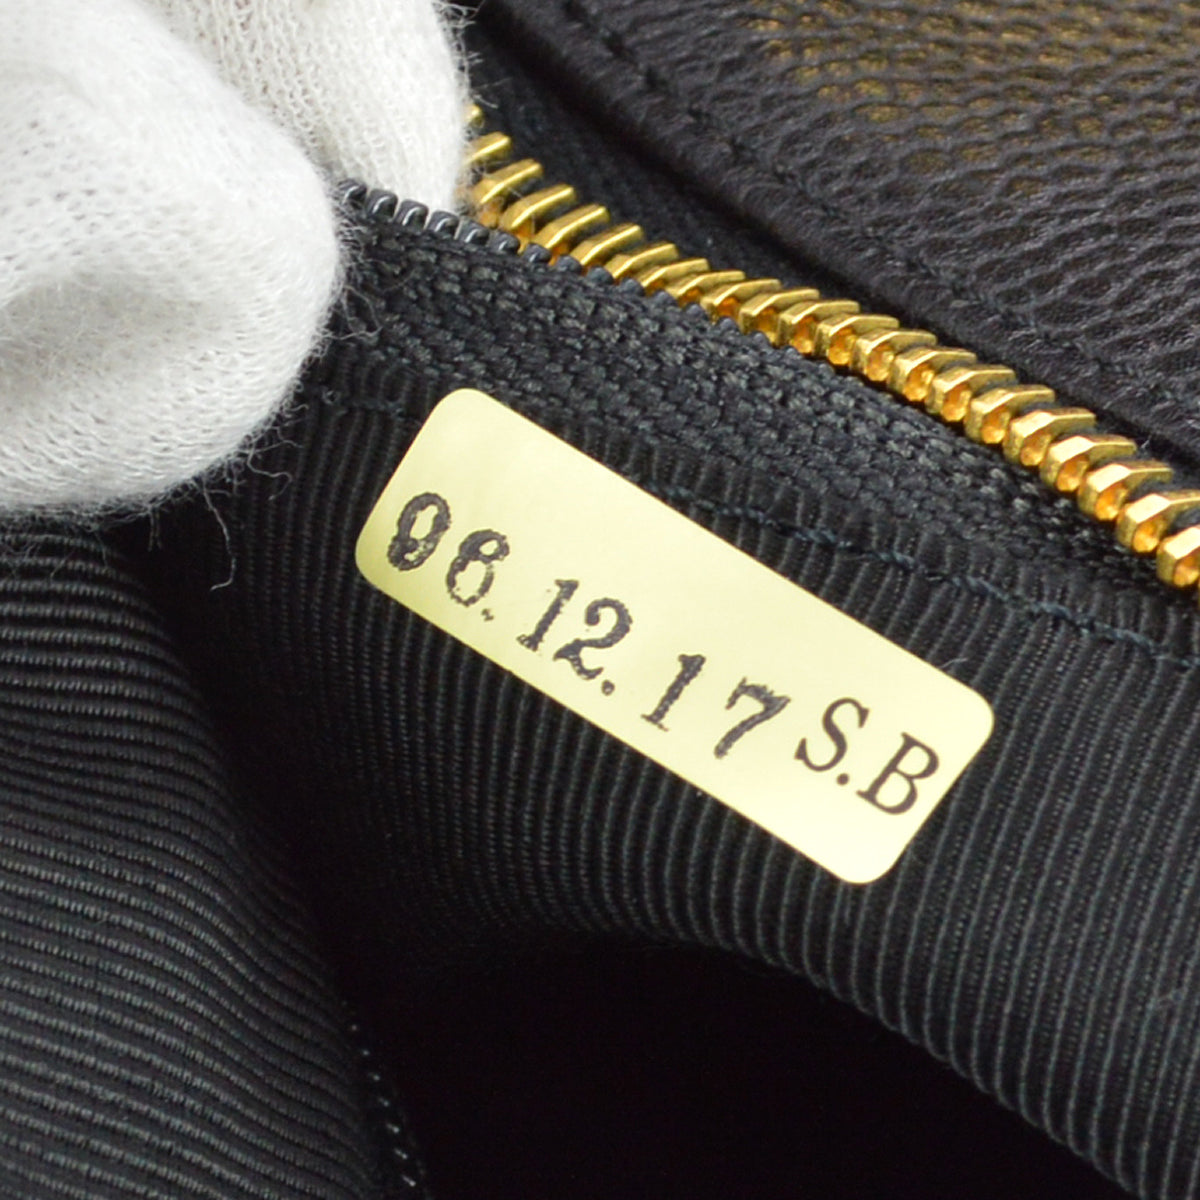 Chanel 1996-1997 Caviar Shoulder Bag